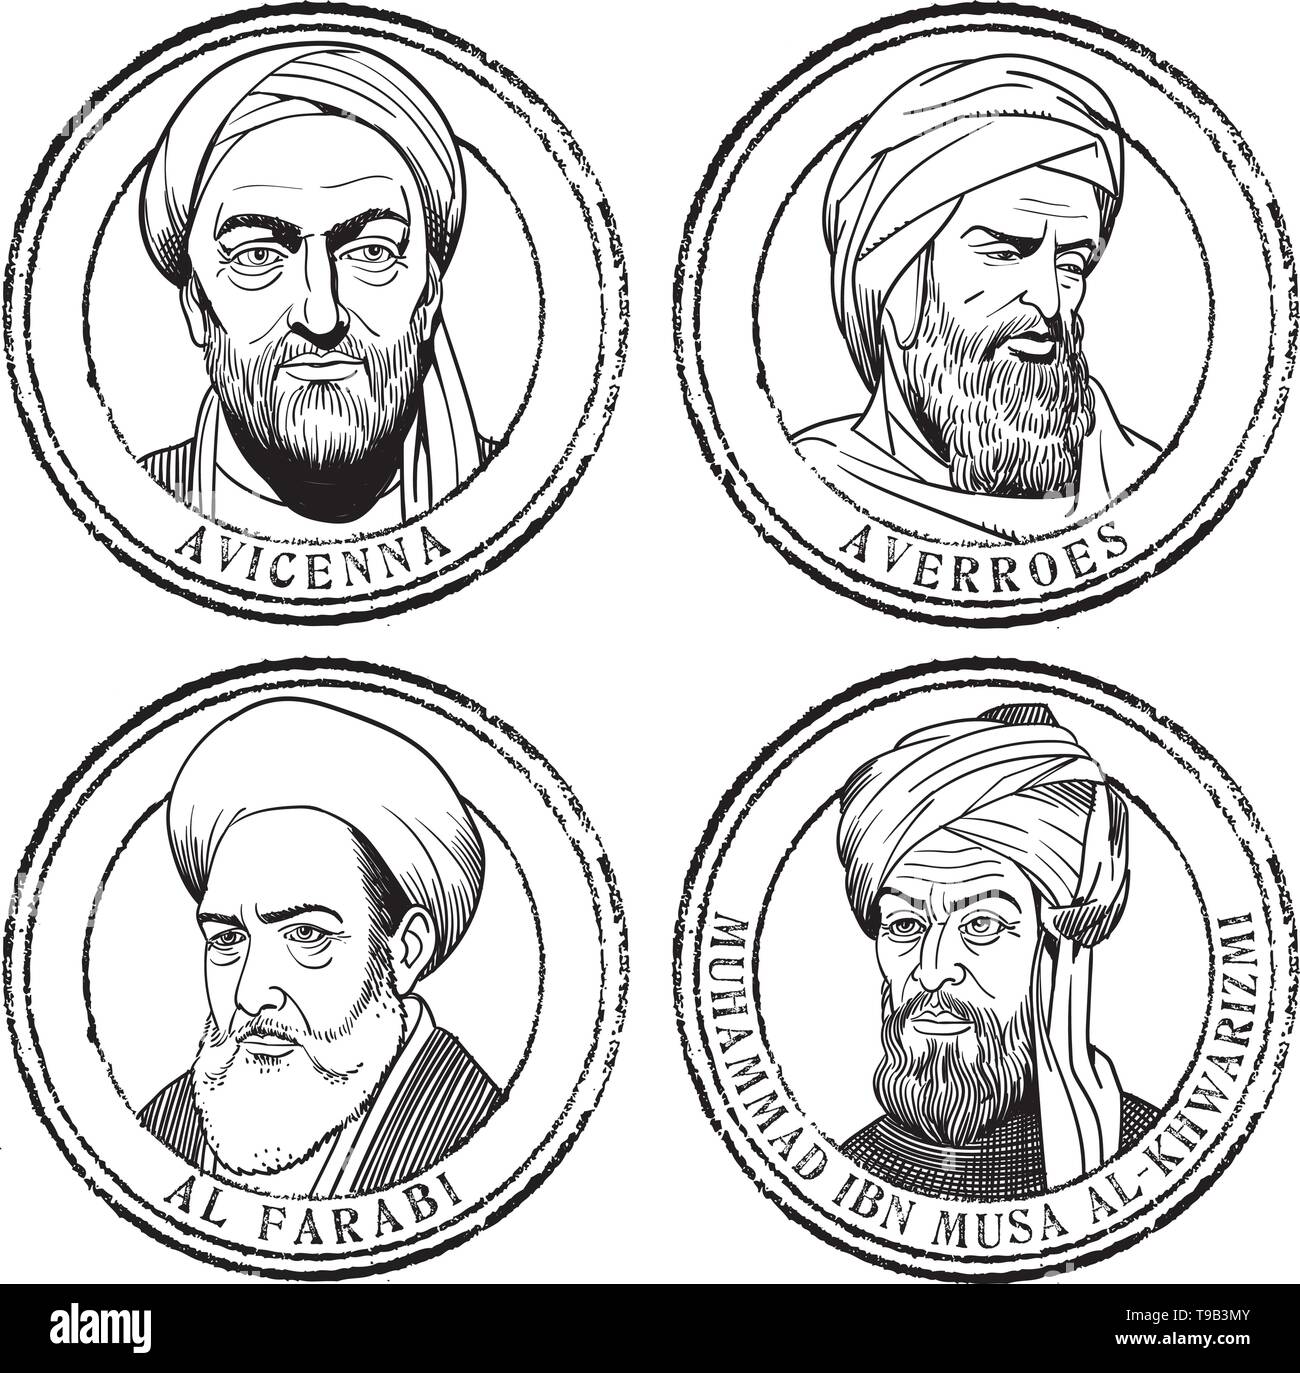 Islamic scientists portraits stamp set, illustration Stock Vector